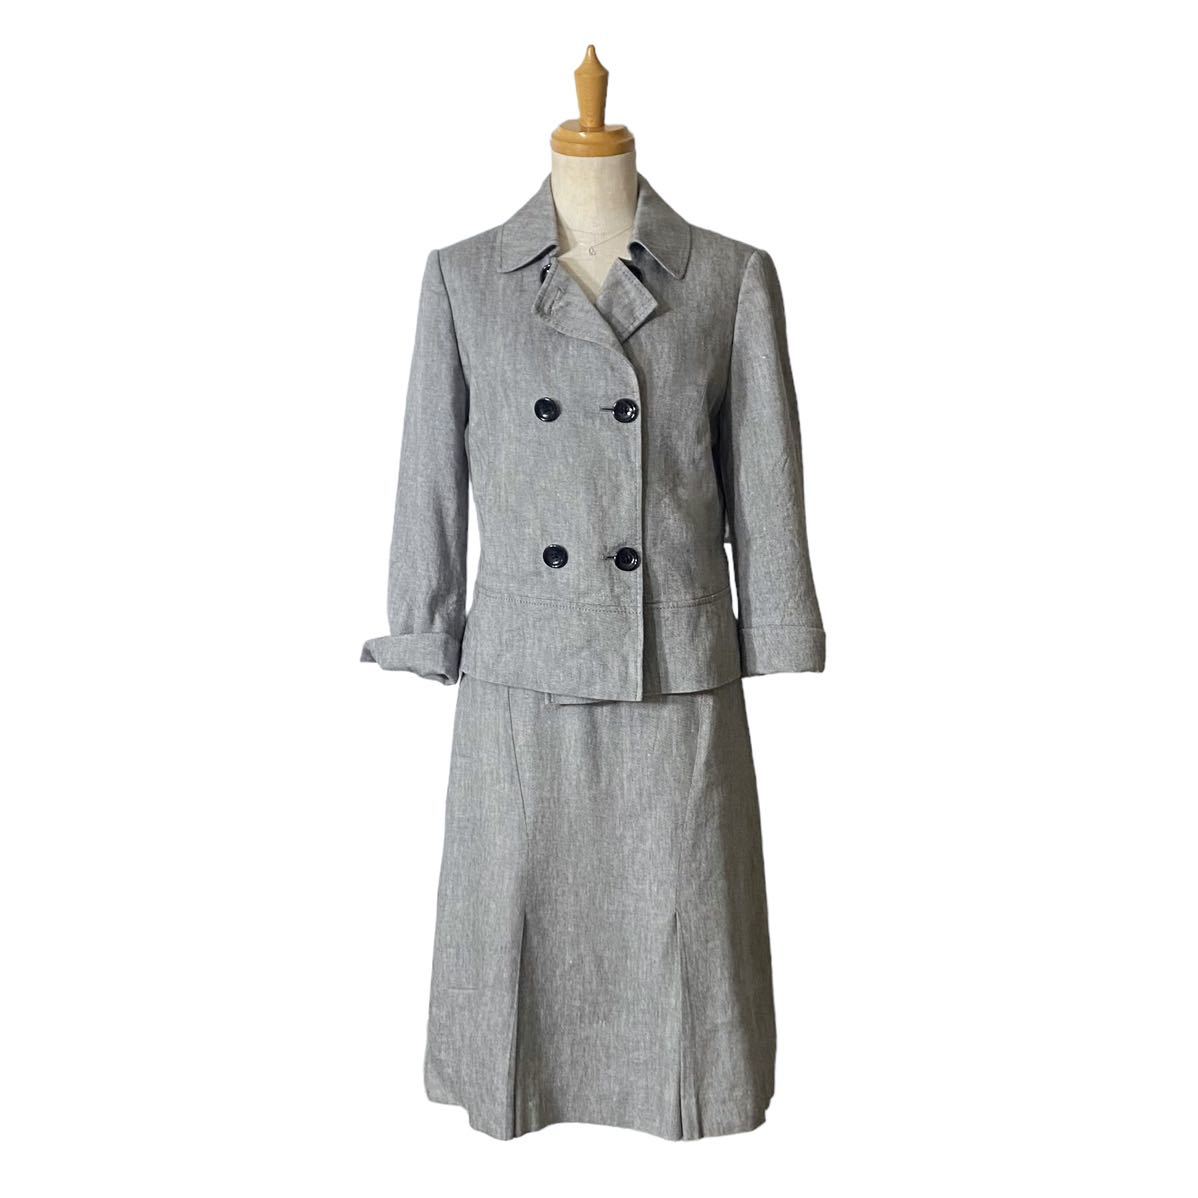 【ANNE KLEIN】 麻混合 スカートスーツ セットアップ サマースーツ グレー サイズ9の画像2